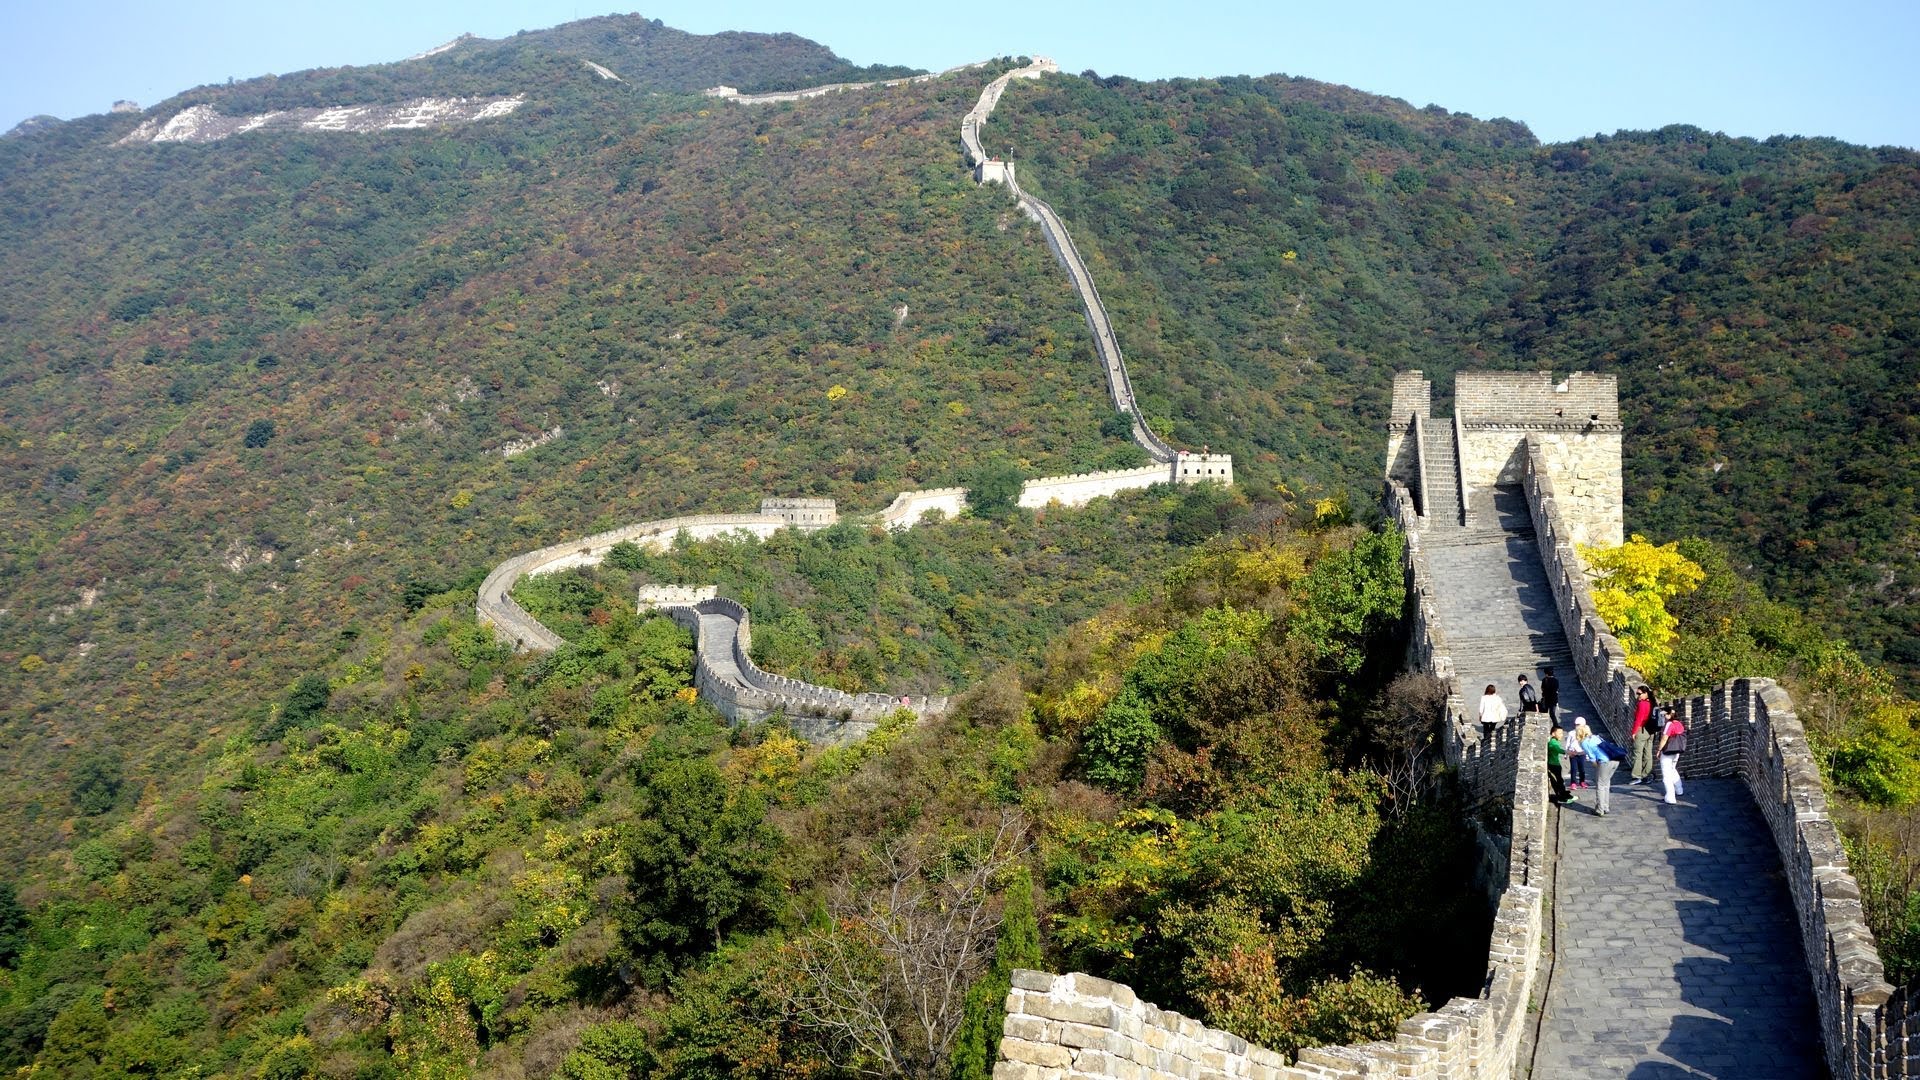 Mutianyu (慕田峪) - A popular Great Wall spot